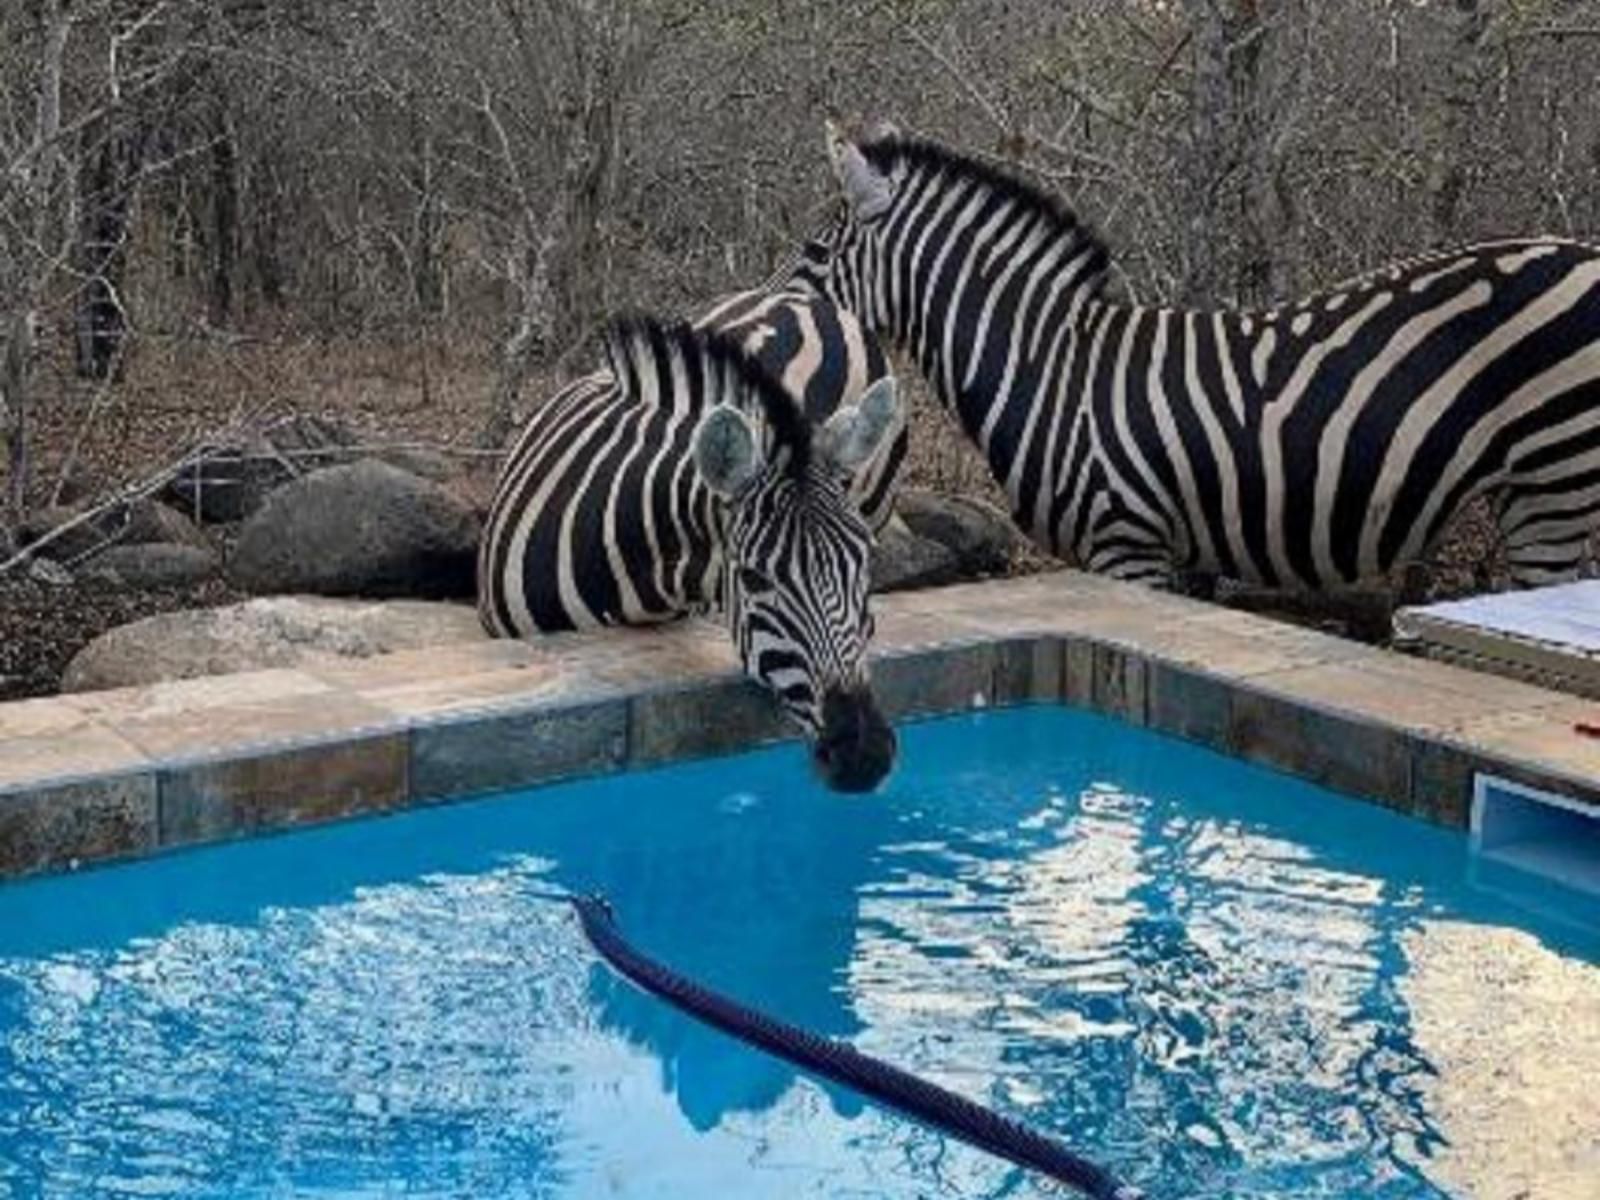 Klein Paradys Marloth Park Mpumalanga South Africa Zebra, Mammal, Animal, Herbivore, Swimming Pool